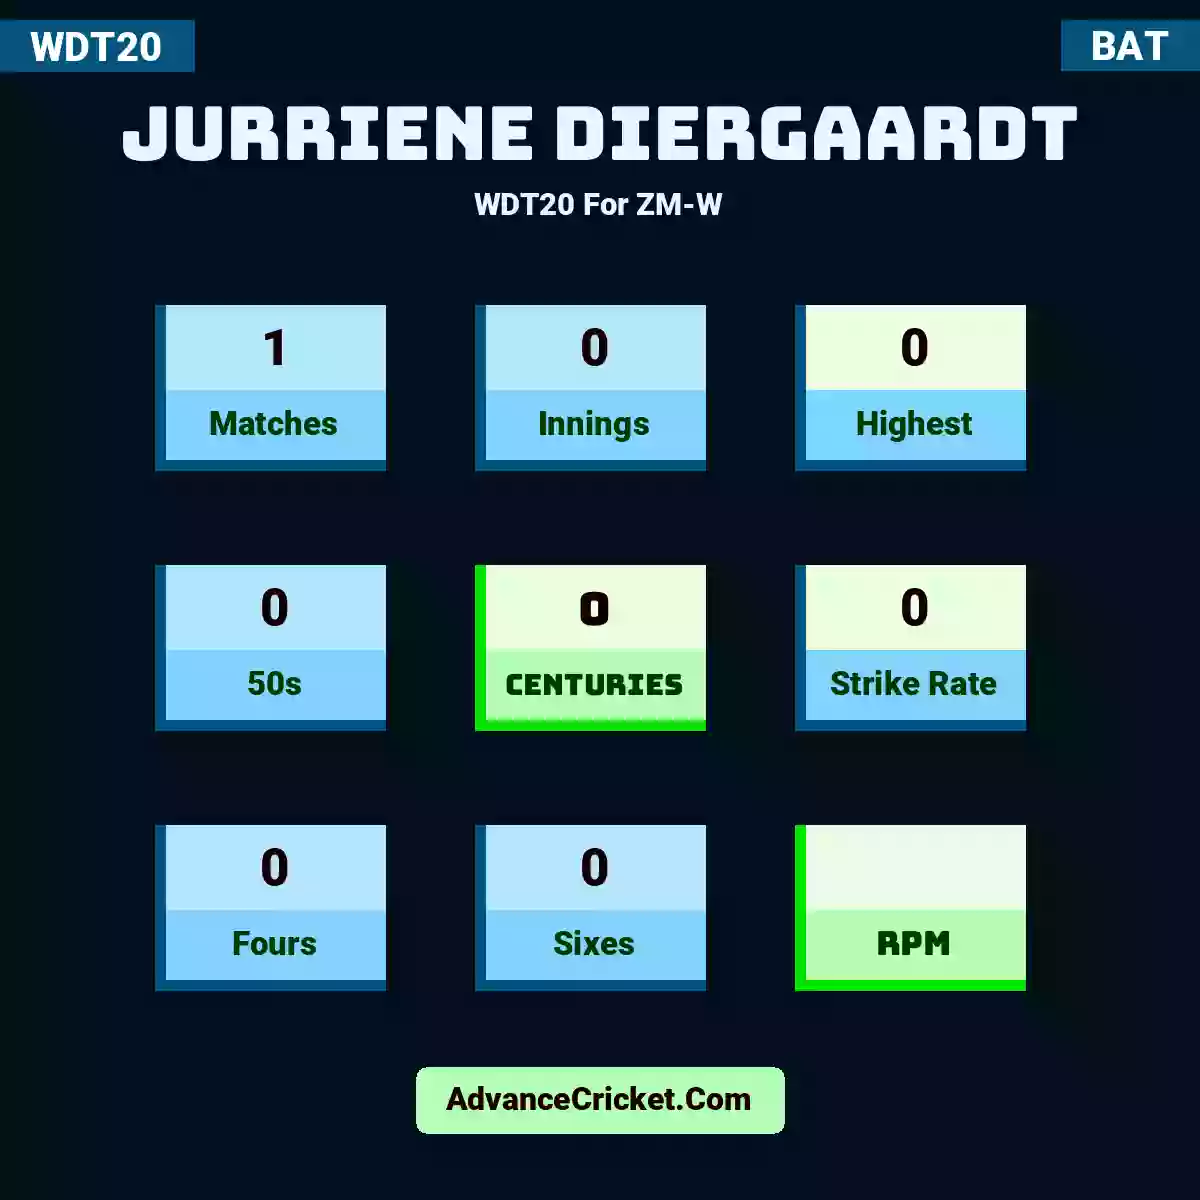 Jurriene Diergaardt WDT20  For ZM-W, Jurriene Diergaardt played 1 matches, scored 0 runs as highest, 0 half-centuries, and 0 centuries, with a strike rate of 0. J.Diergaardt hit 0 fours and 0 sixes.